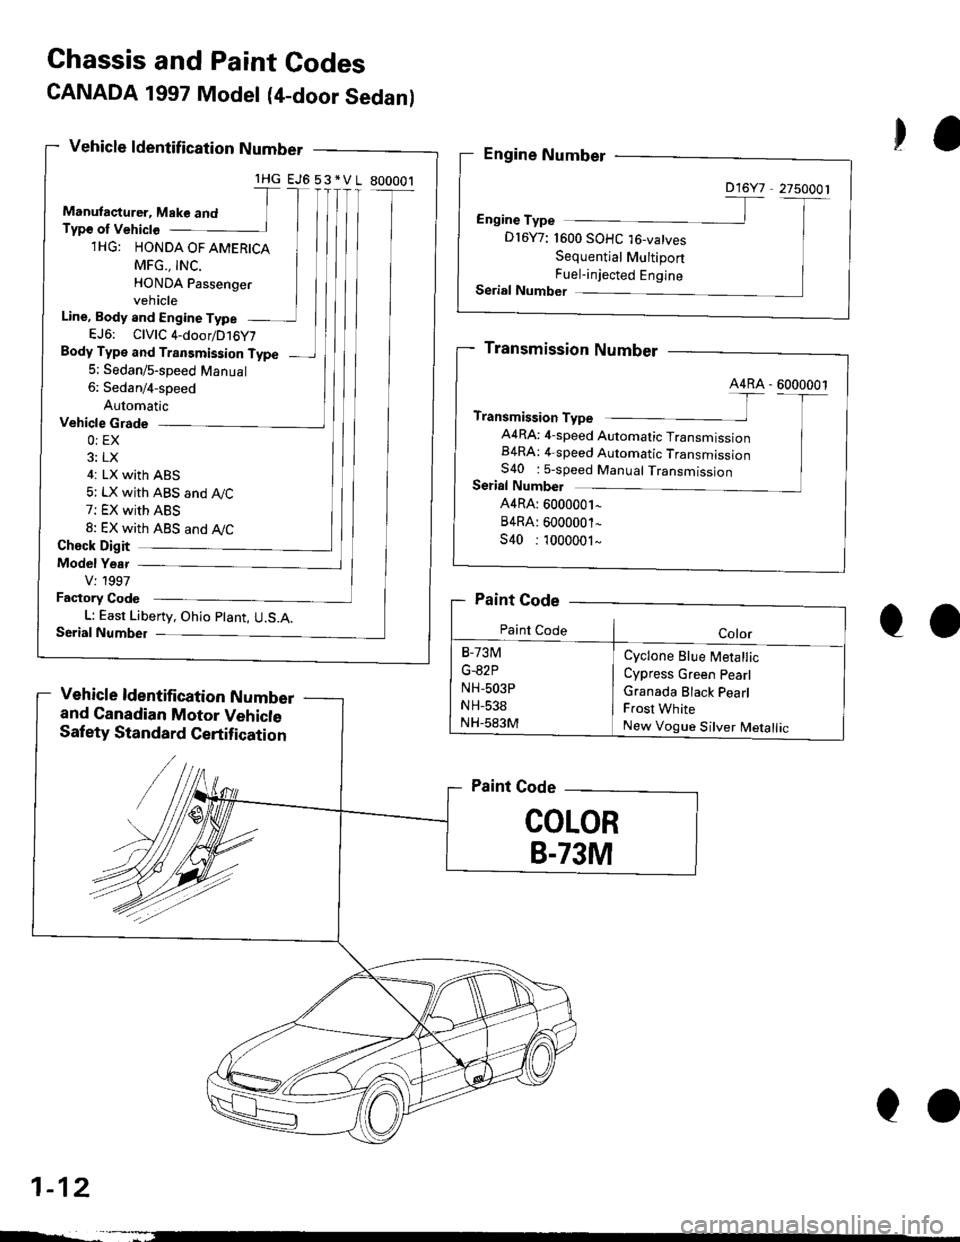 HONDA CIVIC 1998 6.G Workshop Manual Chassis and Paint Godes
CANADA 1997 Modet (4-door Sedan)
Vehicle ldentification Number
and Canadian Motor Vehicle
Safety Standard Certification
1-12
]l
00
Paint Code
COLOR
B.73M
ea
lHG EJ6 53 *V L 800